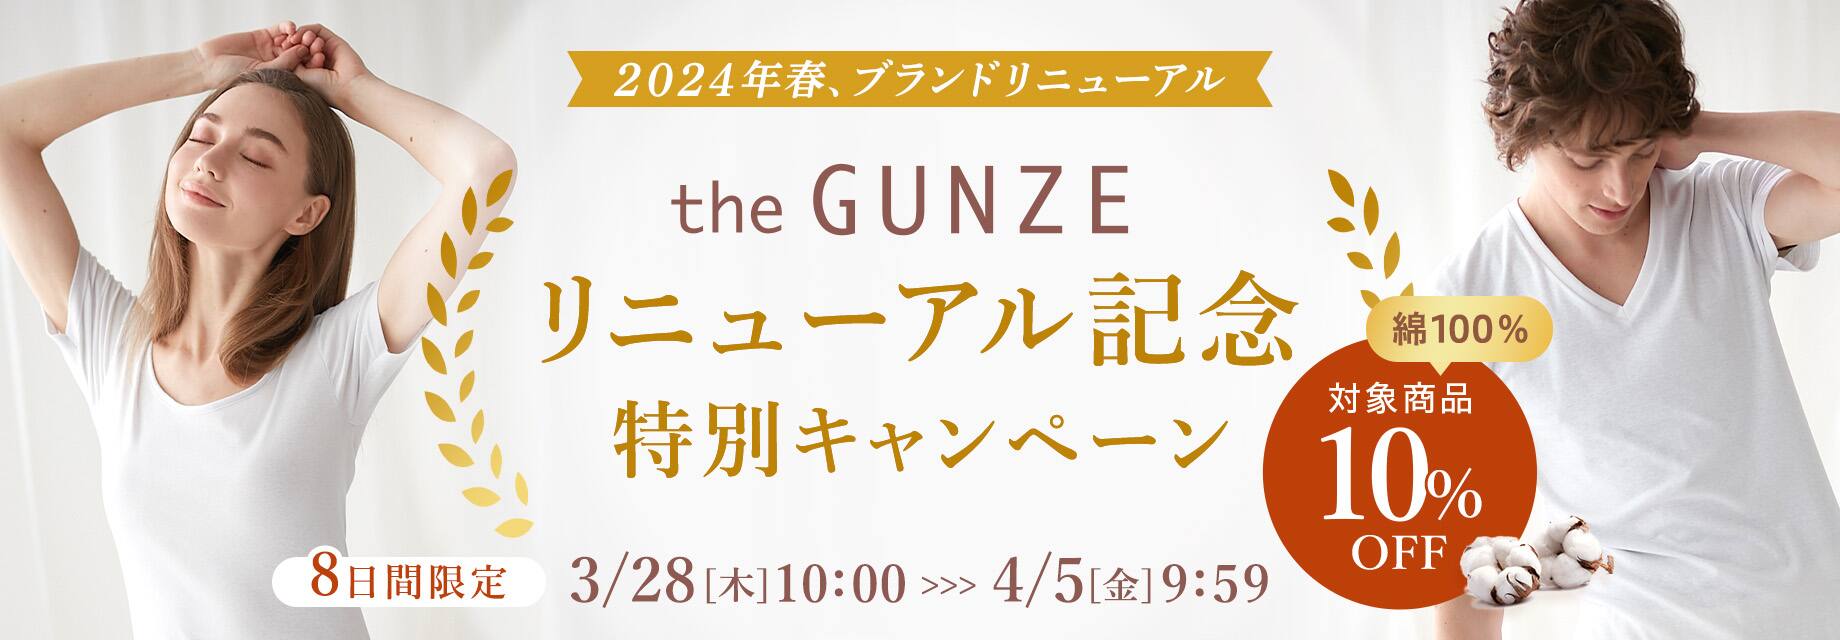 theGUNZE特別キャンペーン